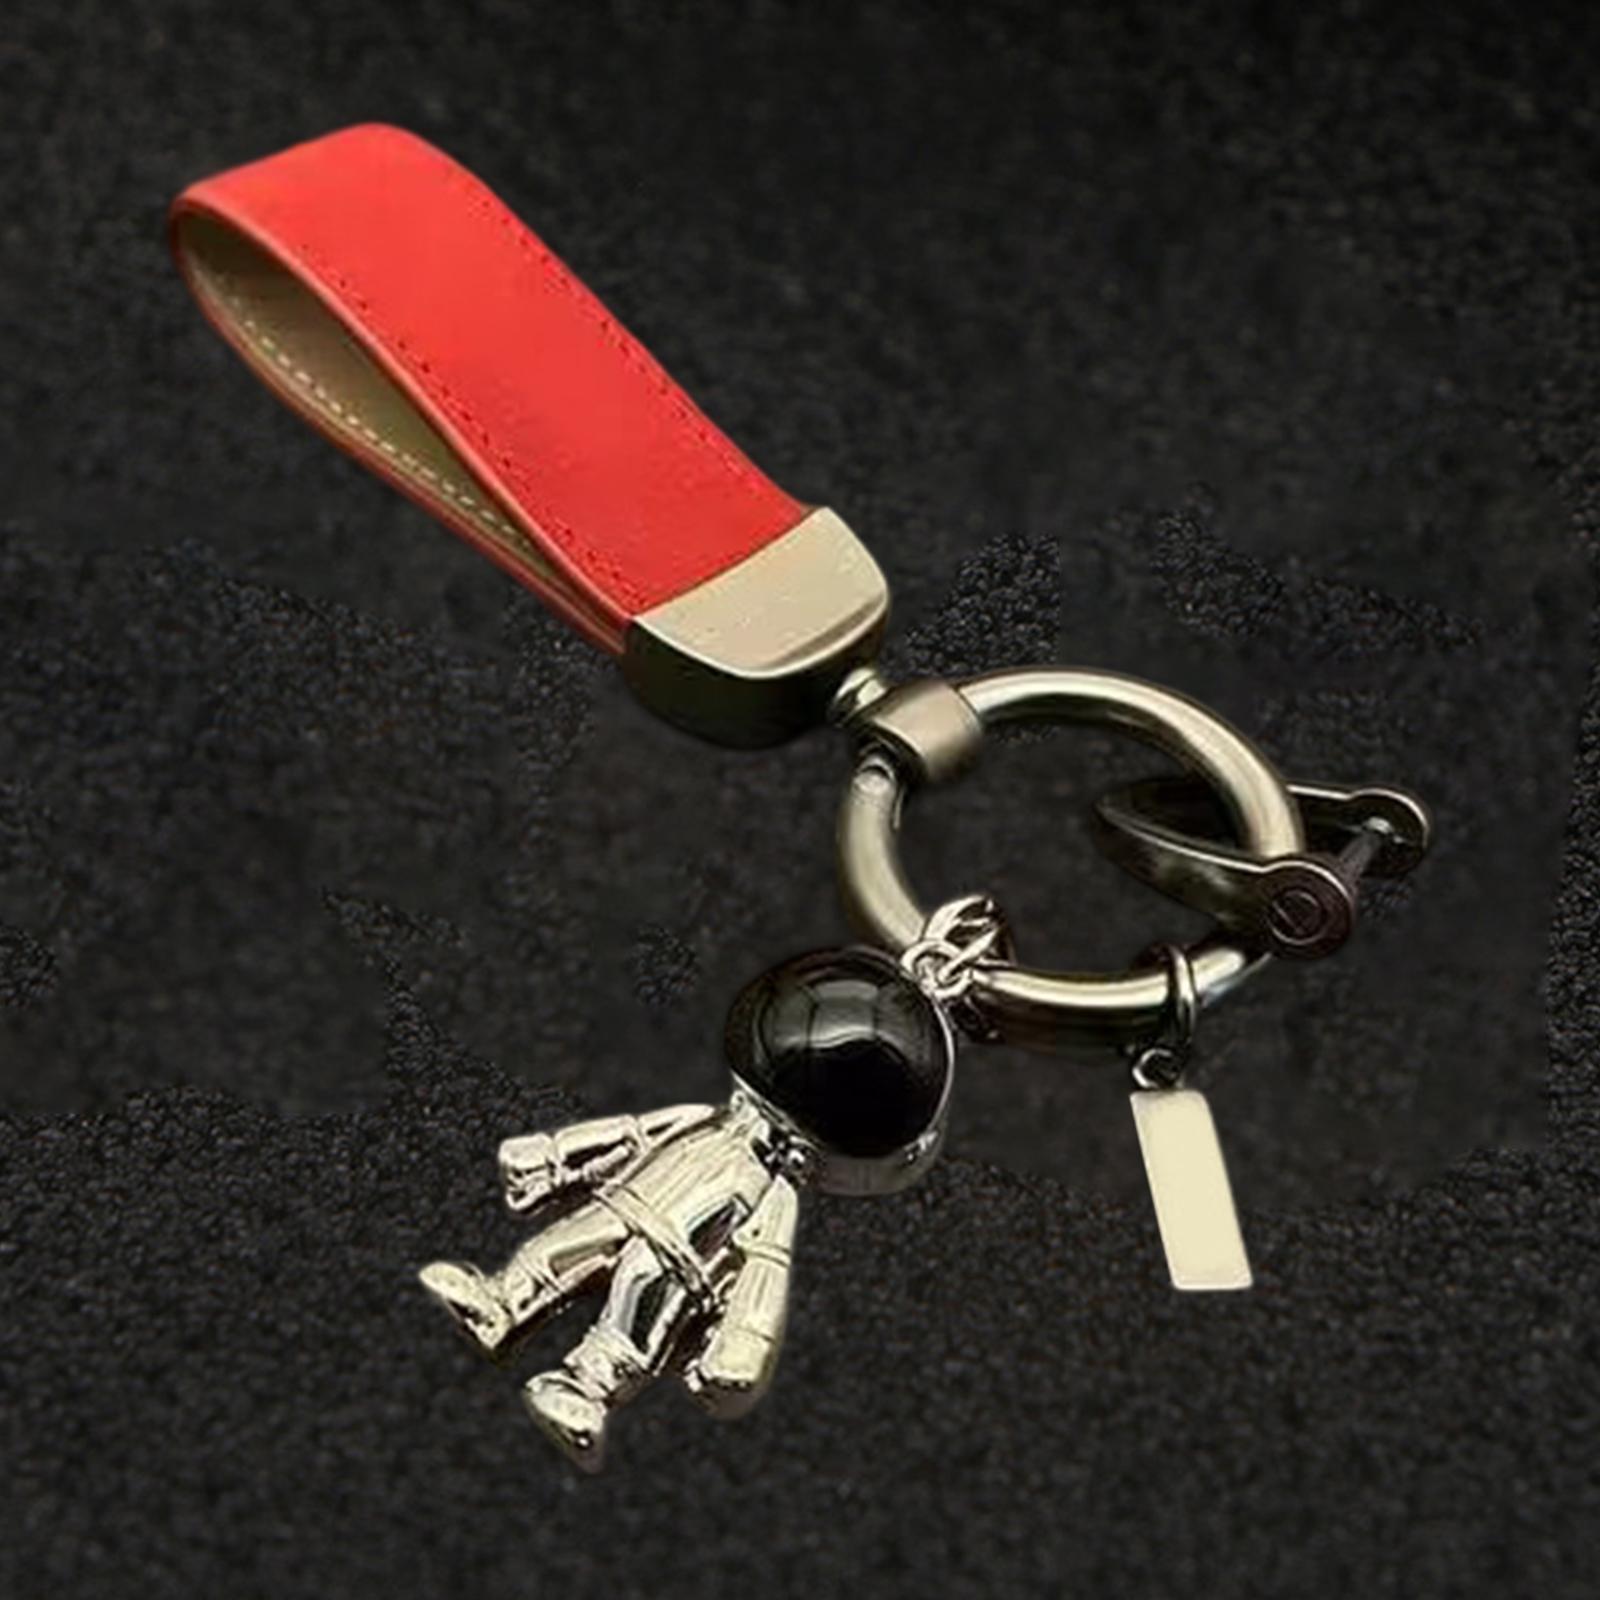 Car Key Chain Decoration Fashion Key Ring Clip for Handbag Purse Wallet Red